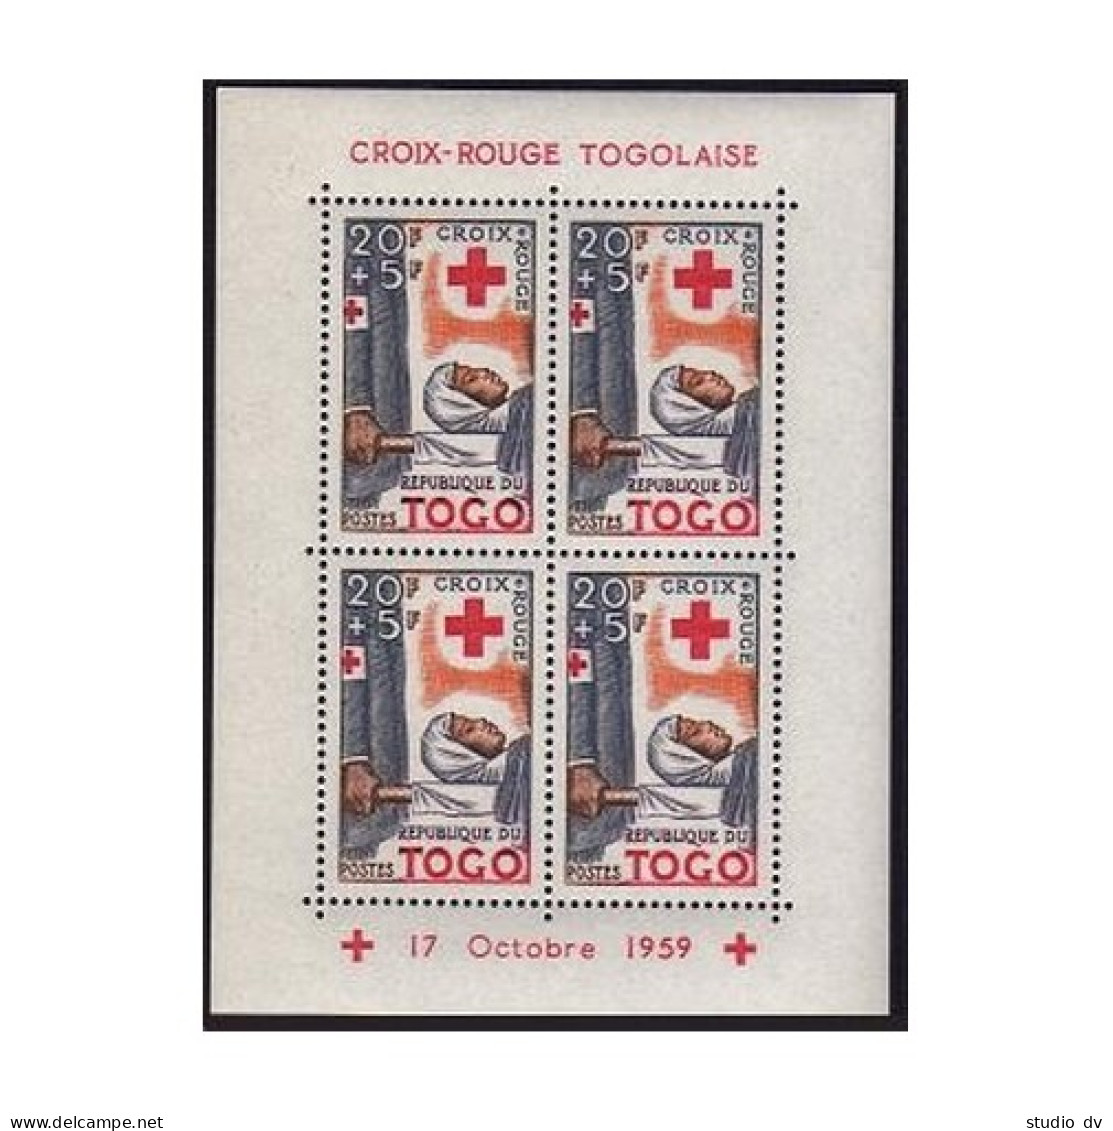 Togo B12a-B14a Sheets,MNH.Michel Bl.2A-4A. Red Cross 1959.Blood Transfusion. - Togo (1960-...)